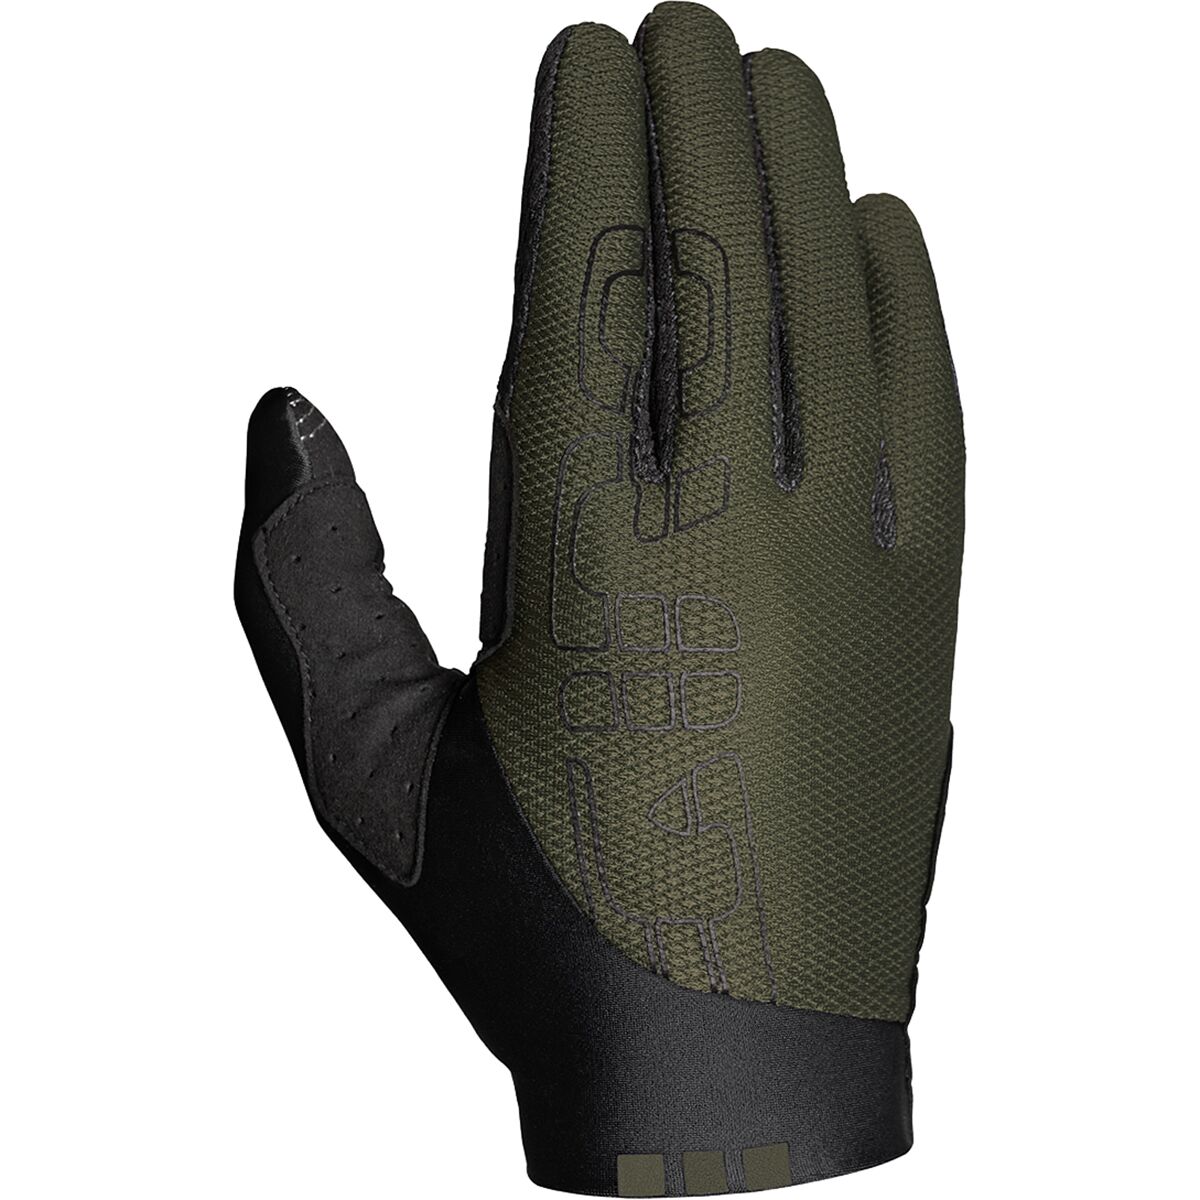 Giro Trixter Glove - Men's Olive, M